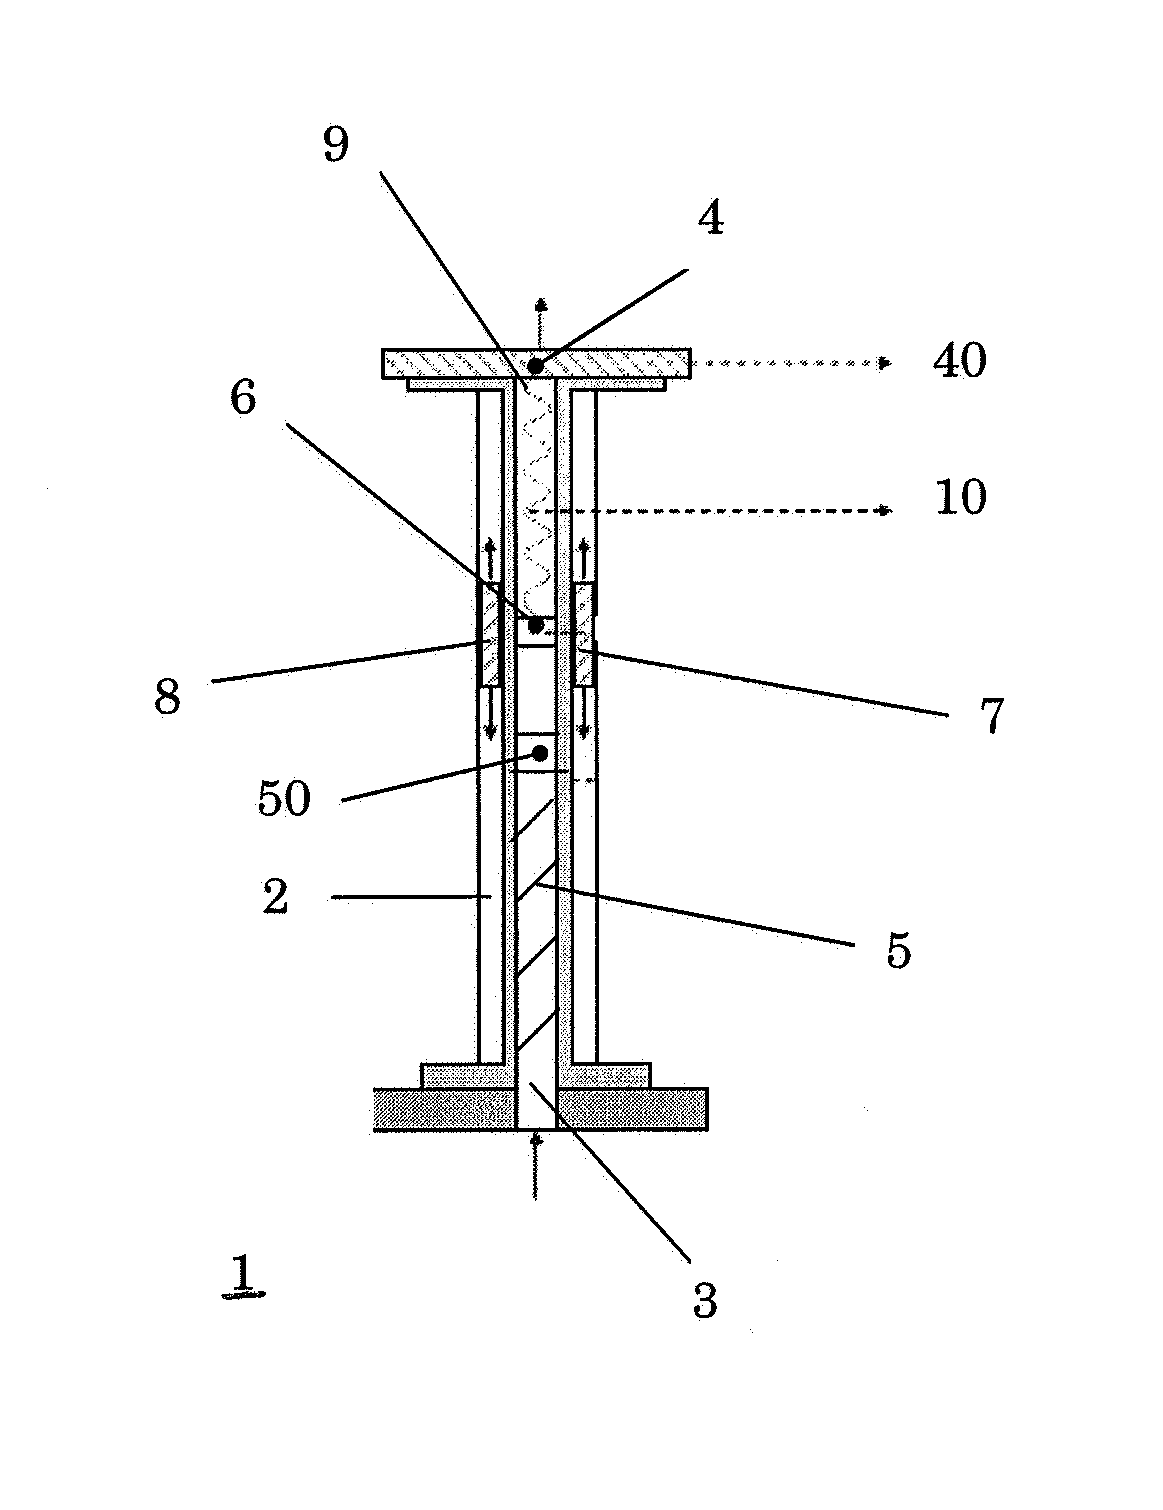 Chromatographic column system